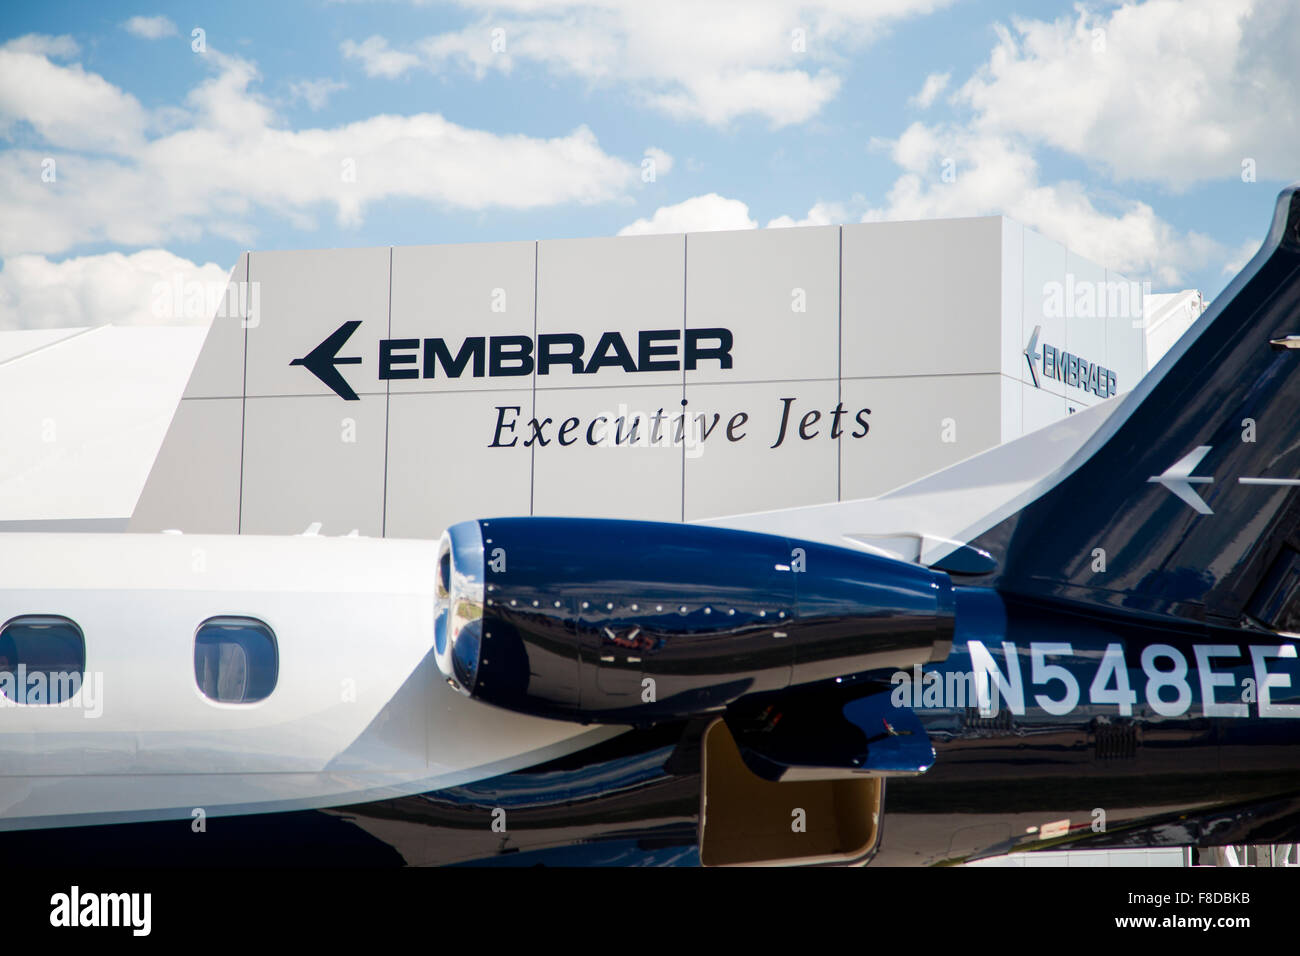 Embraer jets ejecutivos logo y parte de un jet de una muestra de aire Foto de stock